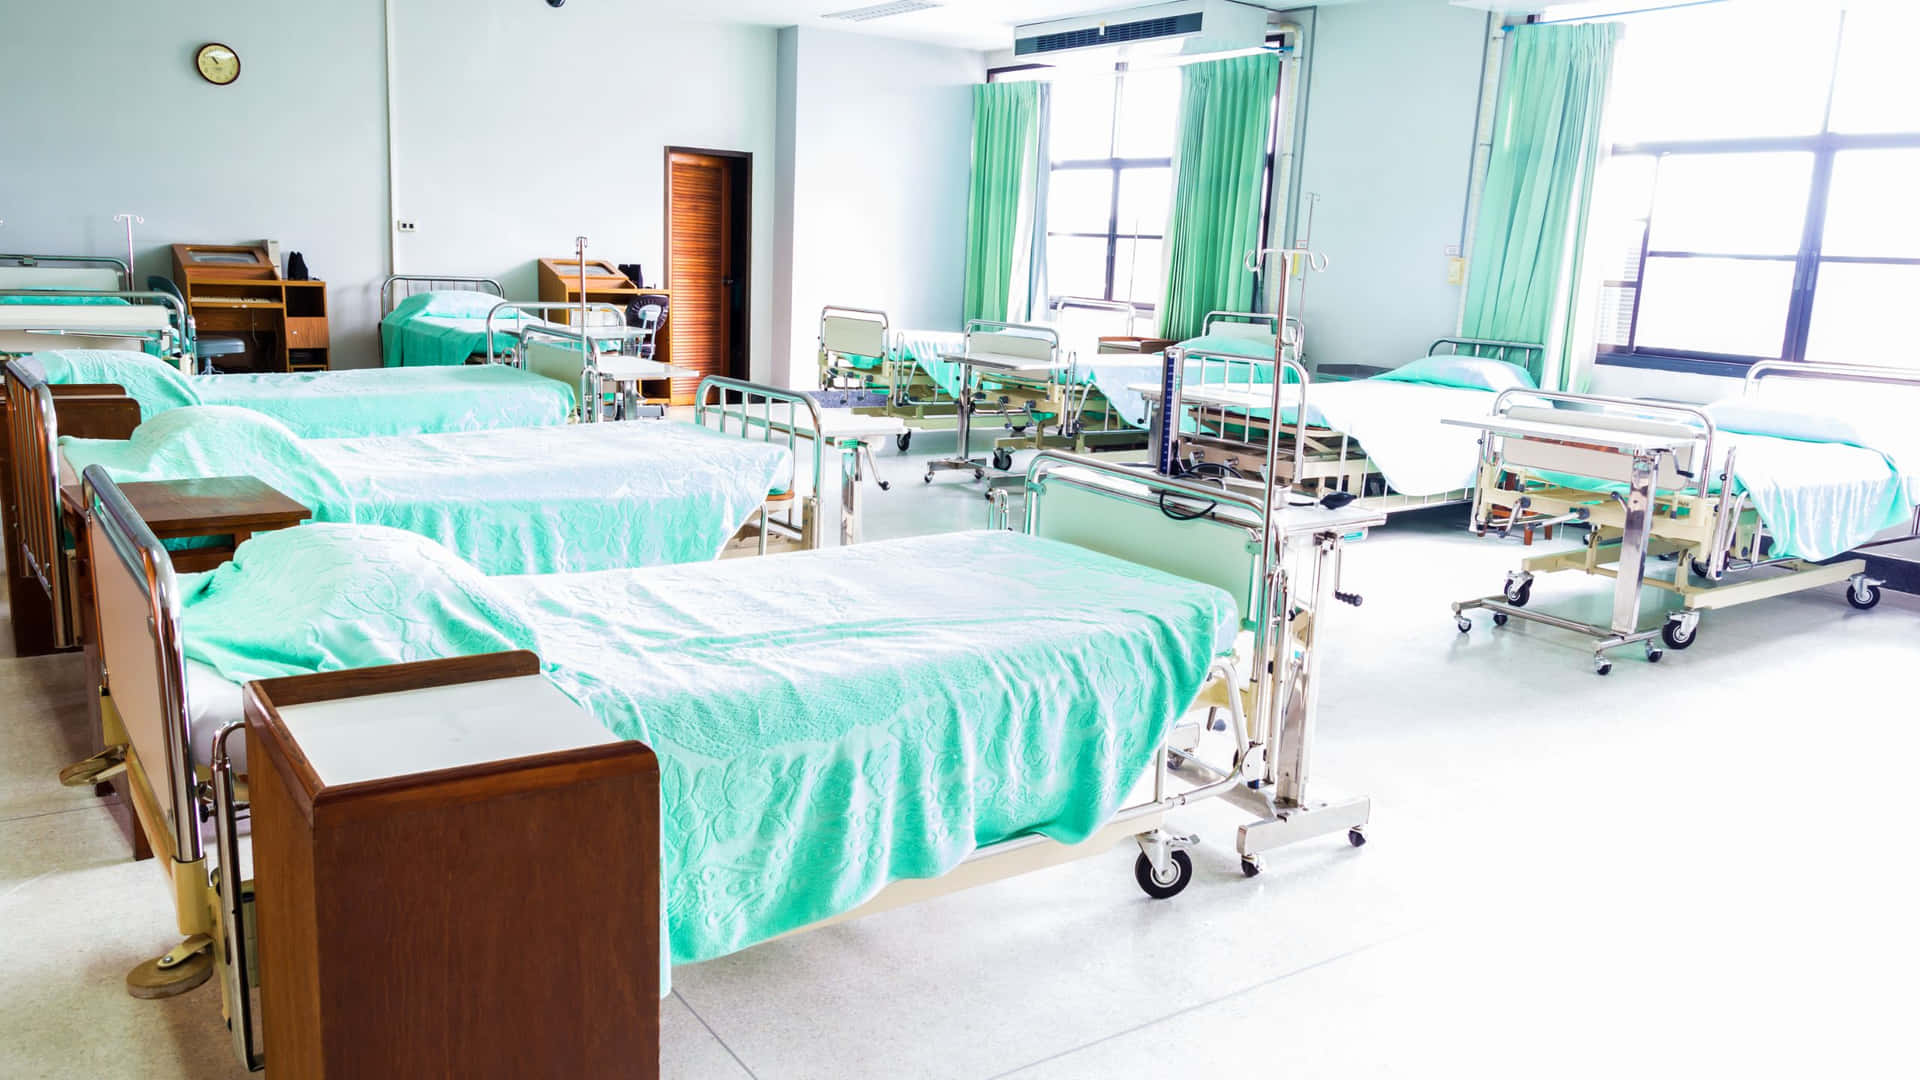 A Hospital Room With Many Beds